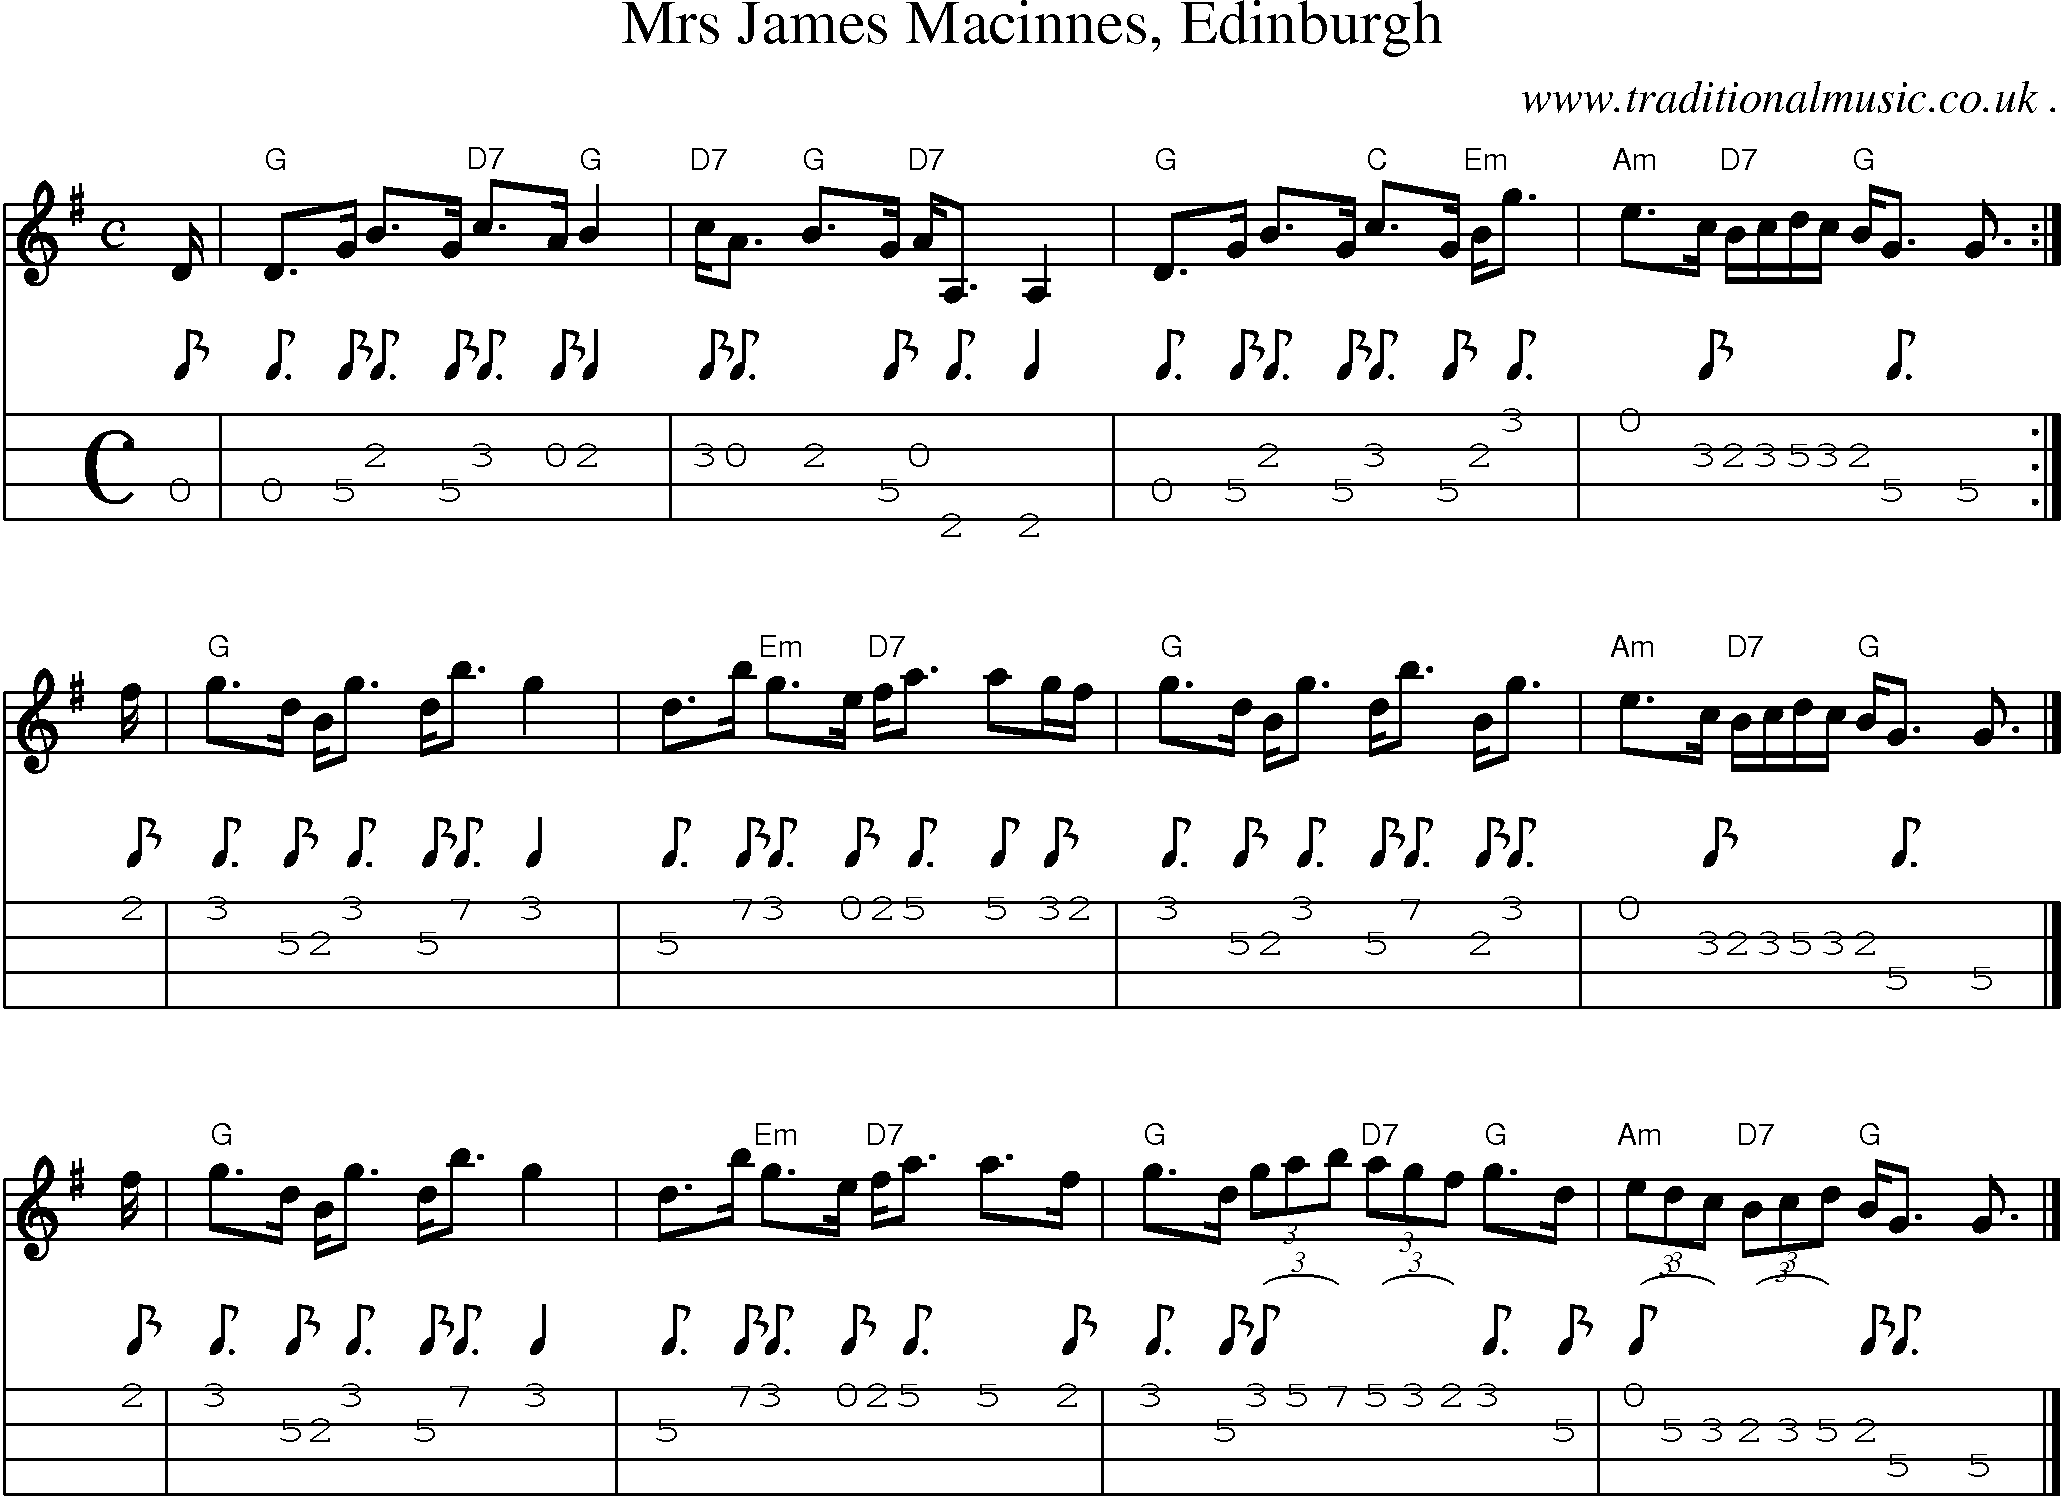 Sheet-music  score, Chords and Mandolin Tabs for Mrs James Macinnes Edinburgh